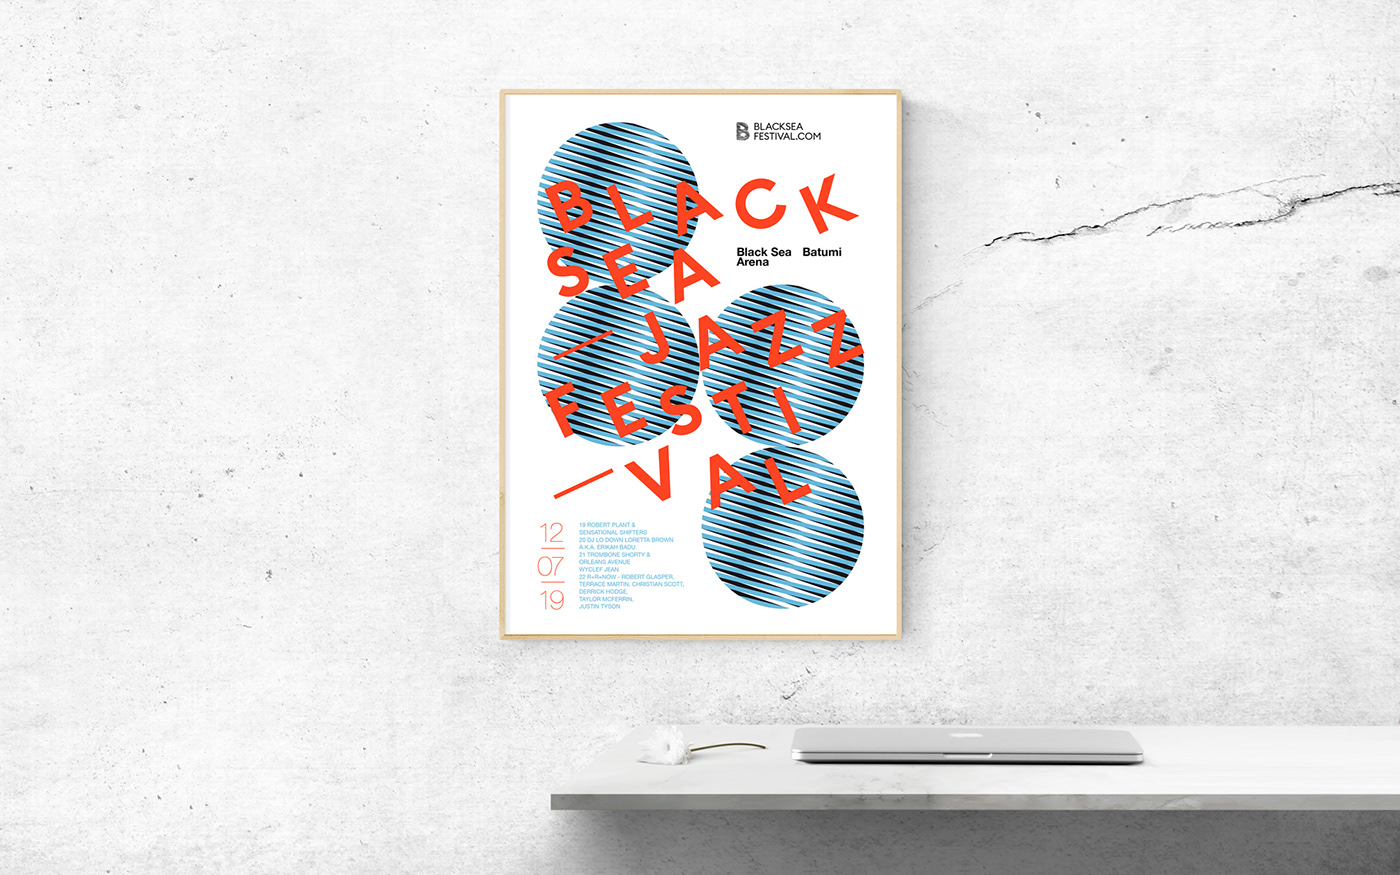 poster Poster Design branding  Branding design jazz festival jazz Events Jazz Poster black sea Swiss Poster